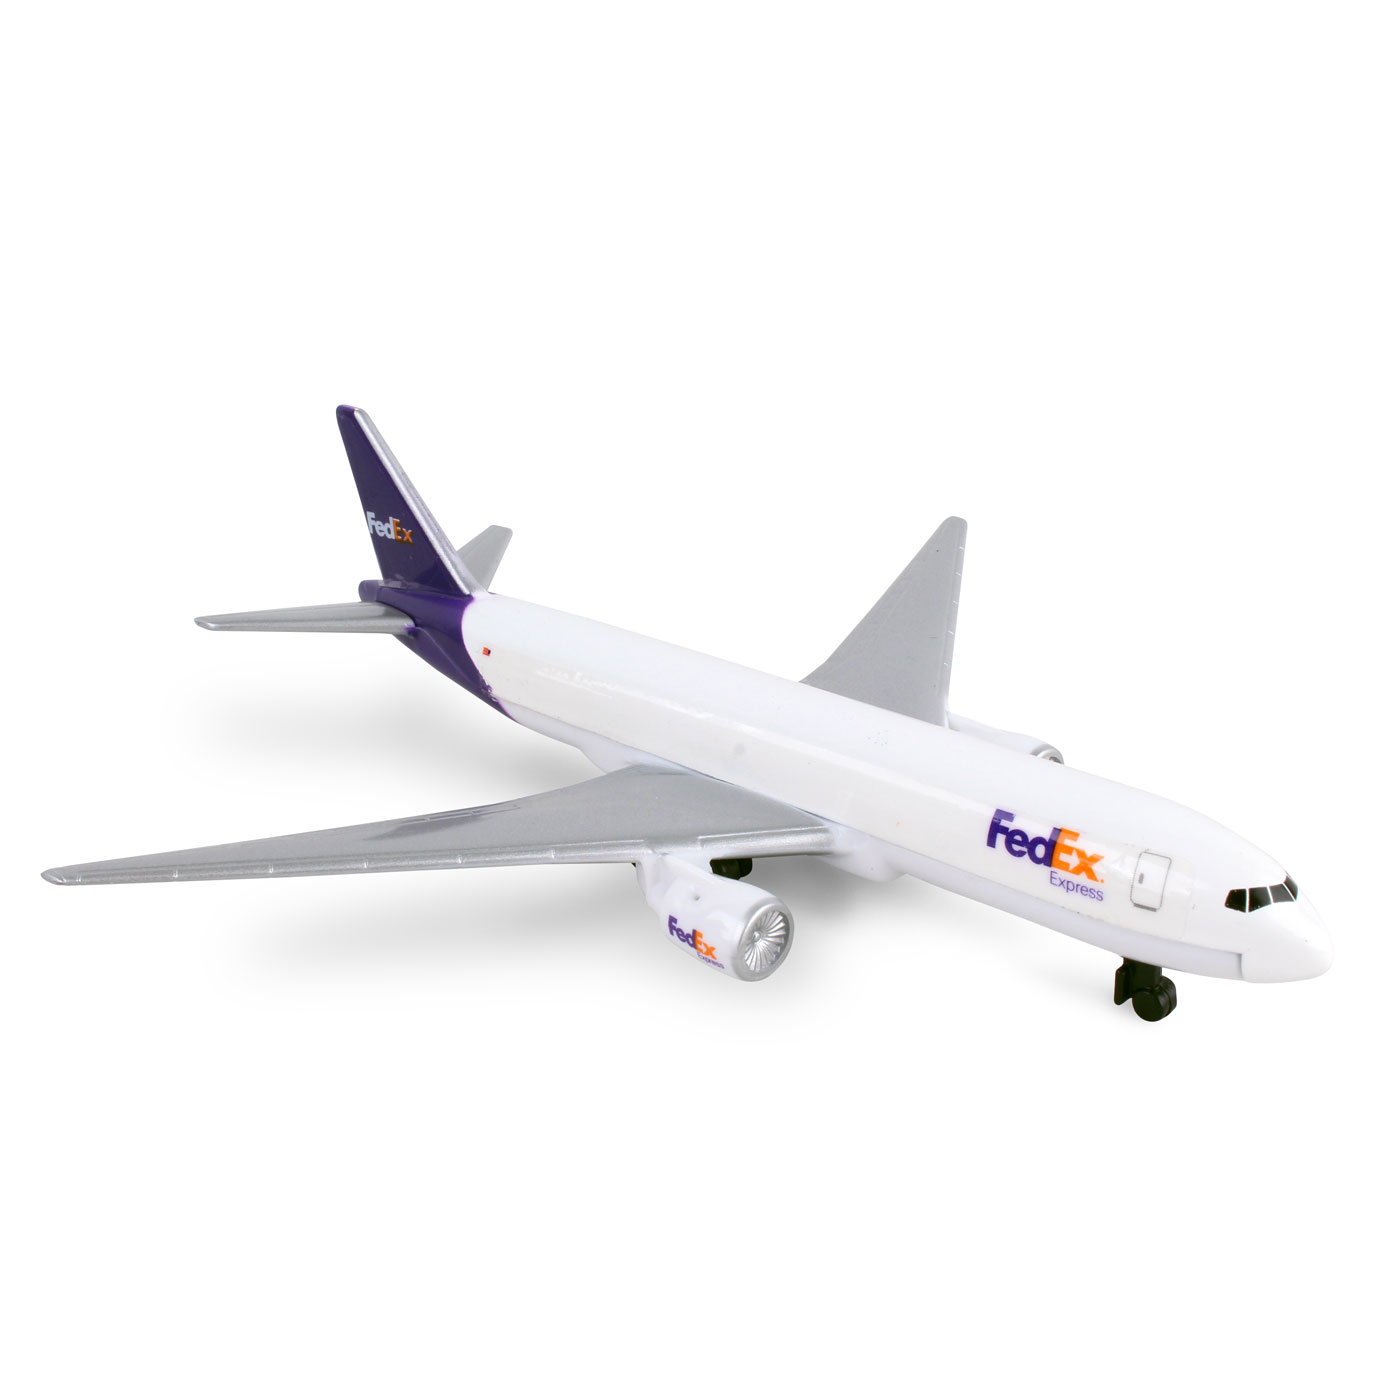 FedEx Spielzeugflugzeug Diecast 14,5cm lang 13,5cm breit RT1044 Federal Express 